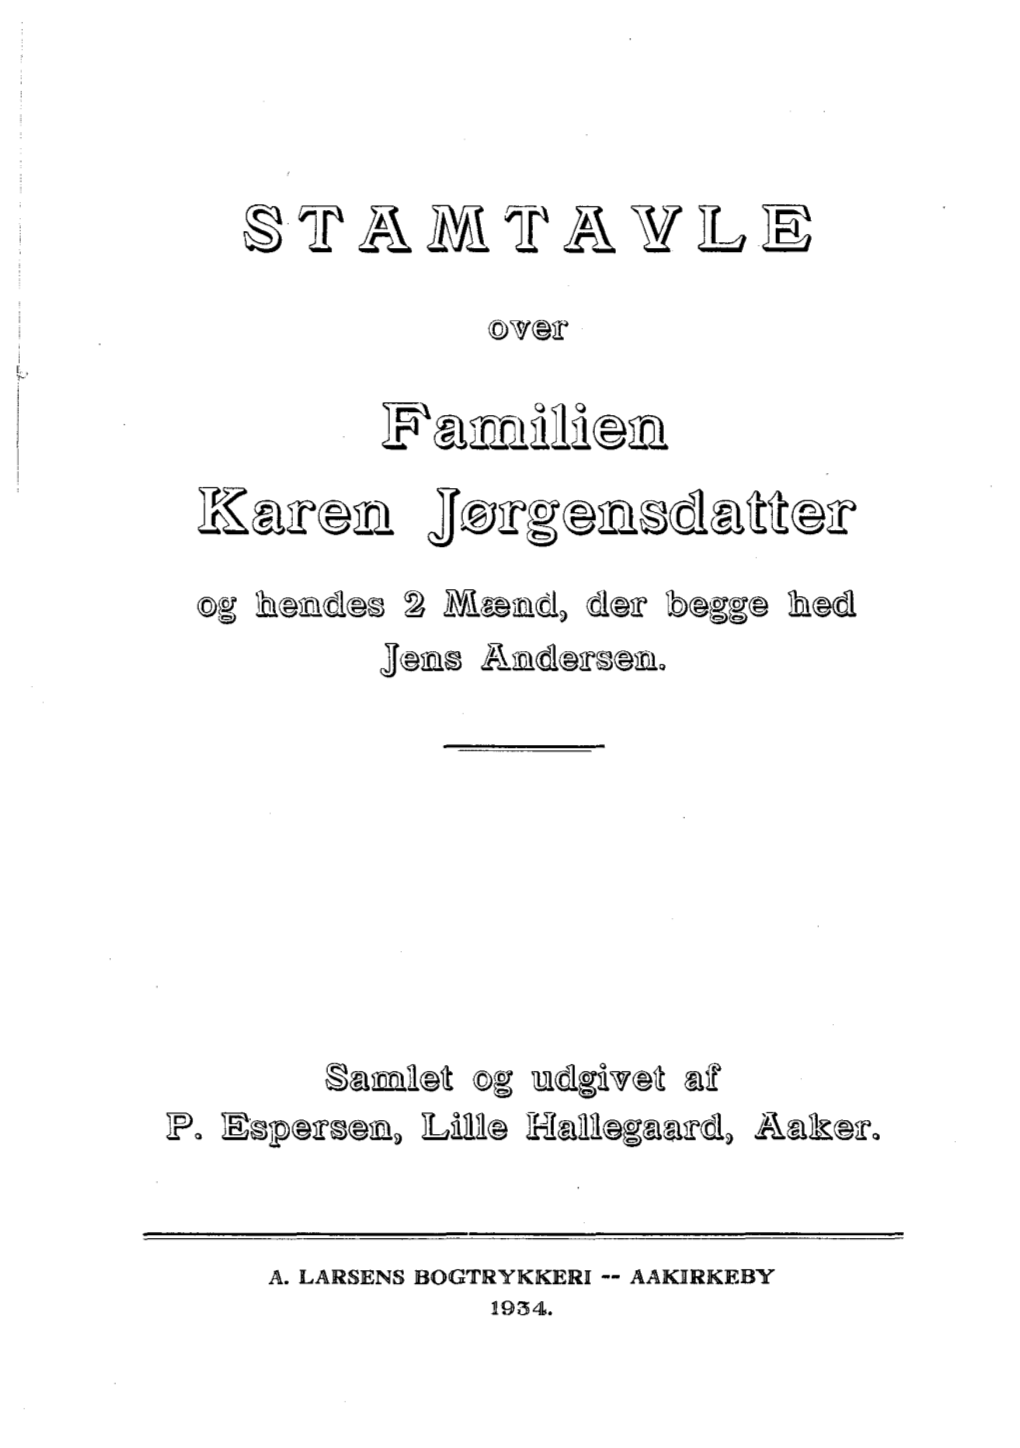 Karen -Jørgensda Tter